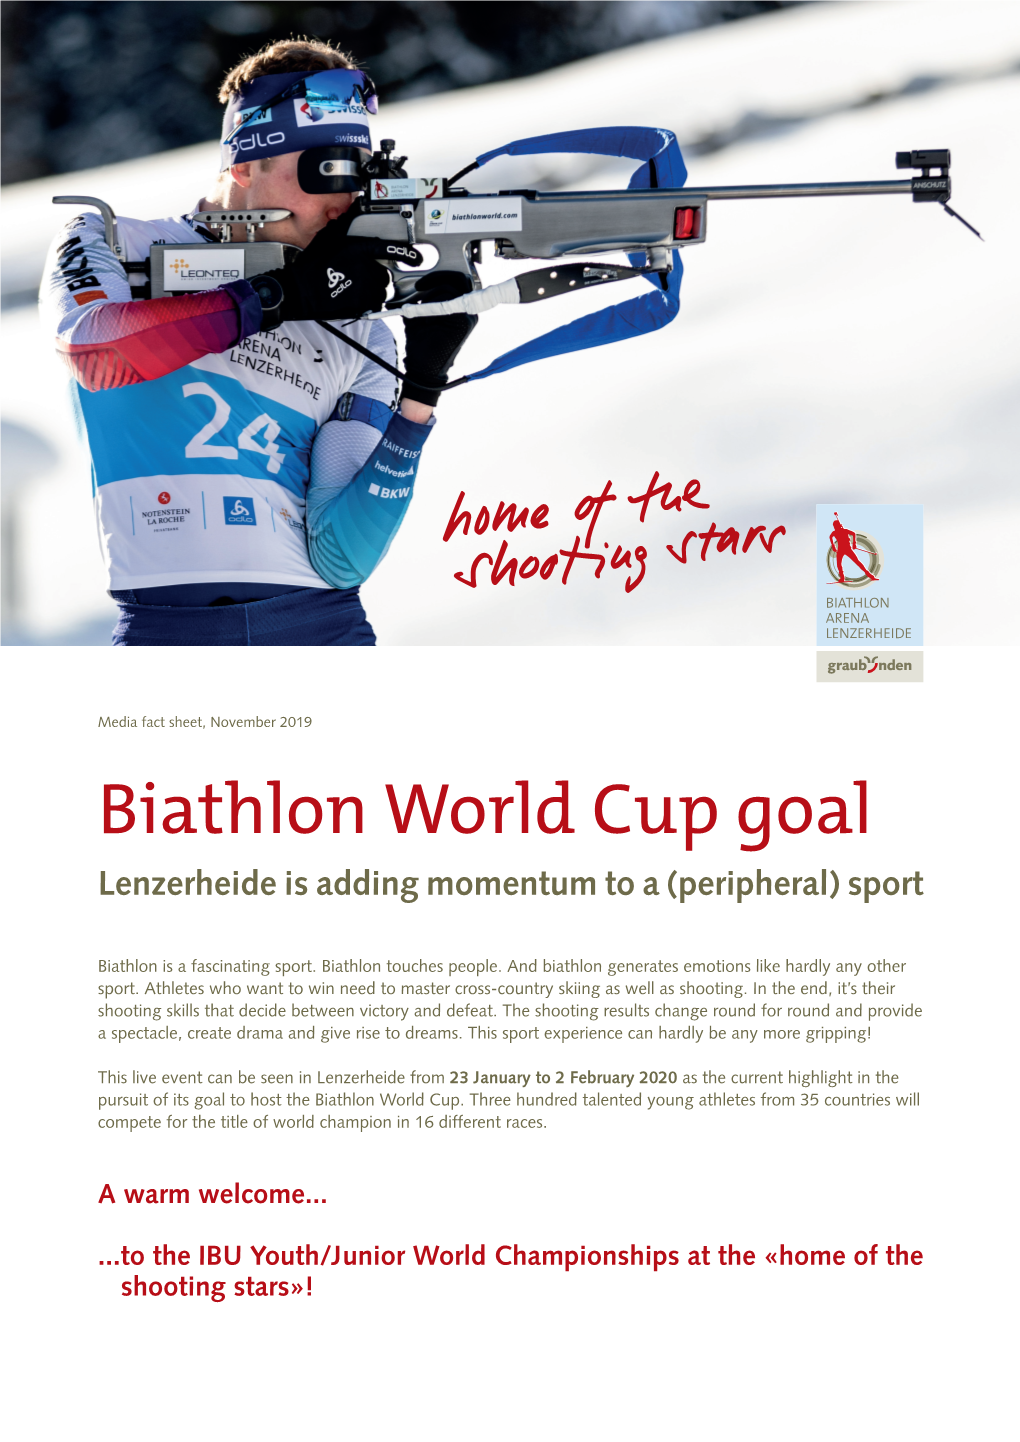 Biathlon World Cup Goal Lenzerheide Is Adding Momentum to a (Peripheral) Sport